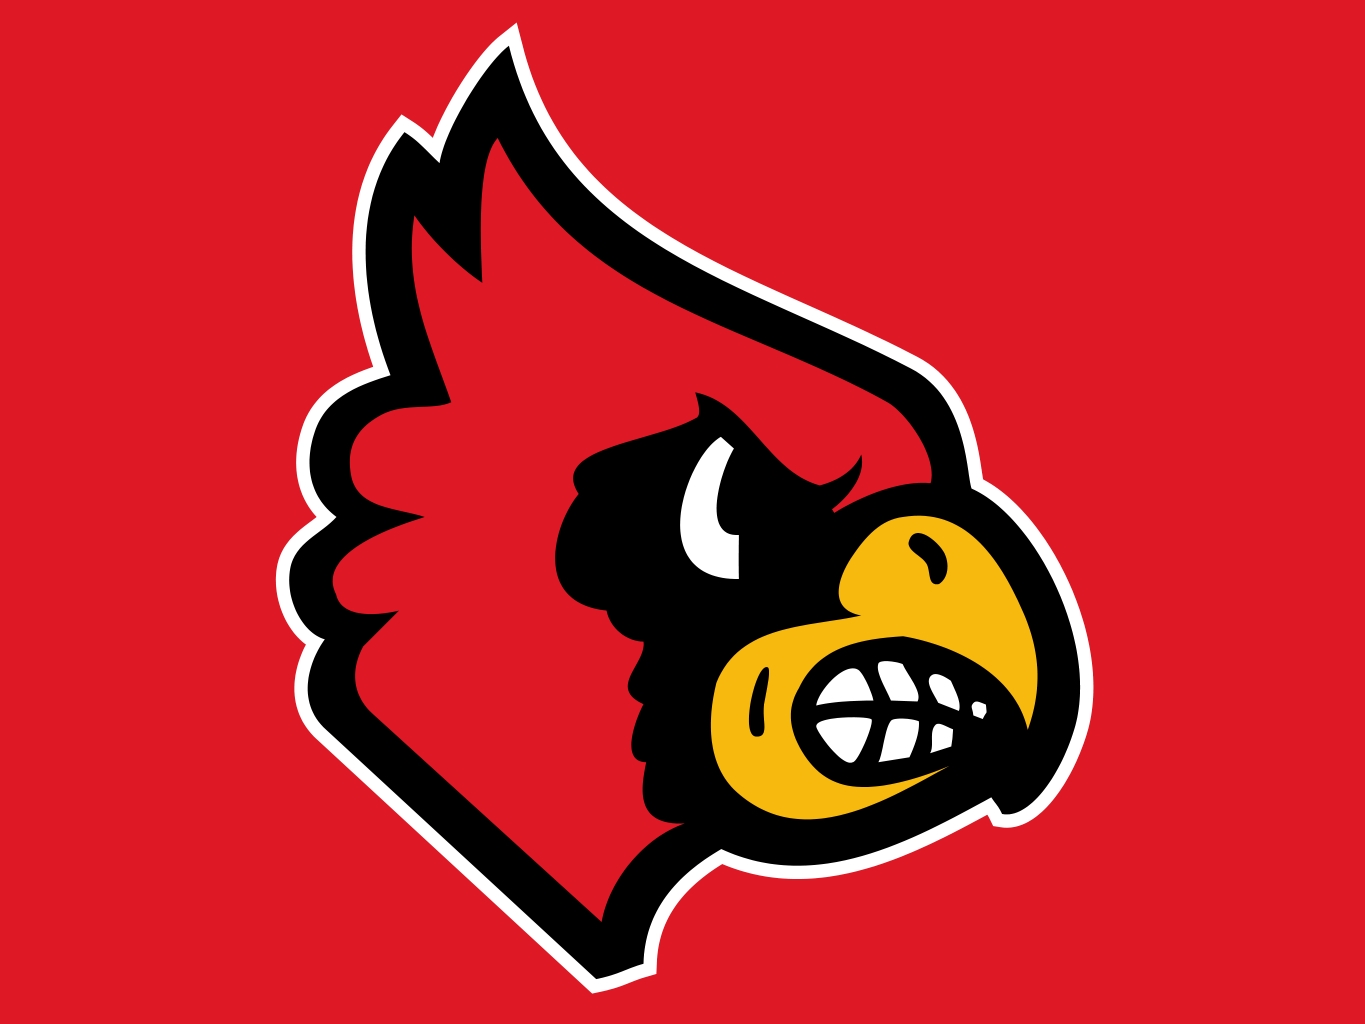 1000x774px #715545 Louisville Cardinals (230.95 KB) | 13.04.2015 ...